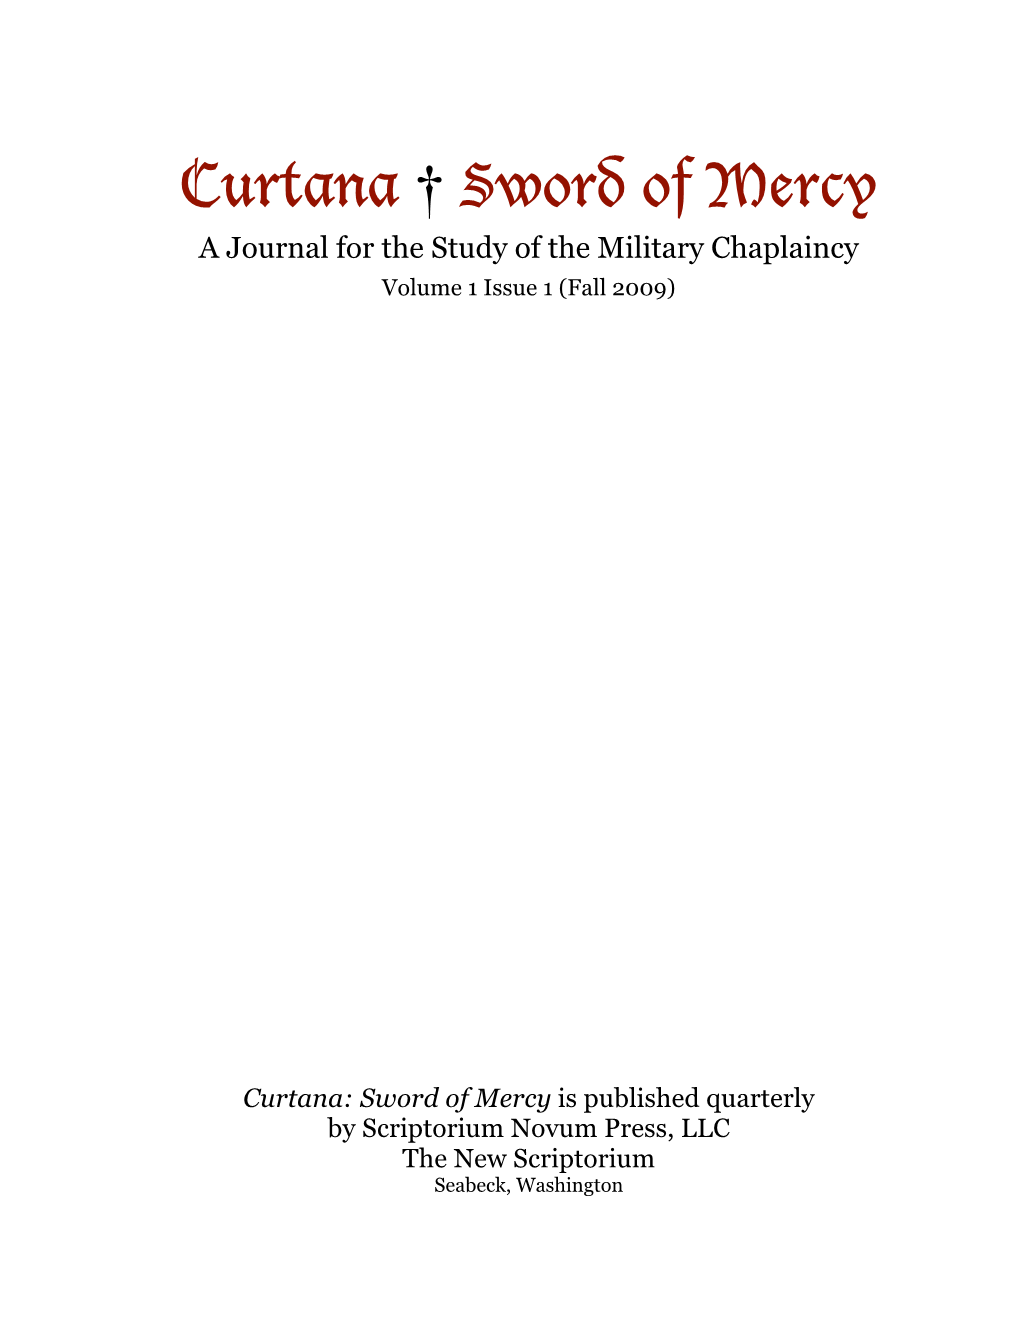 Curtana: Sword of Mercy 1.1 (Fall 2009)